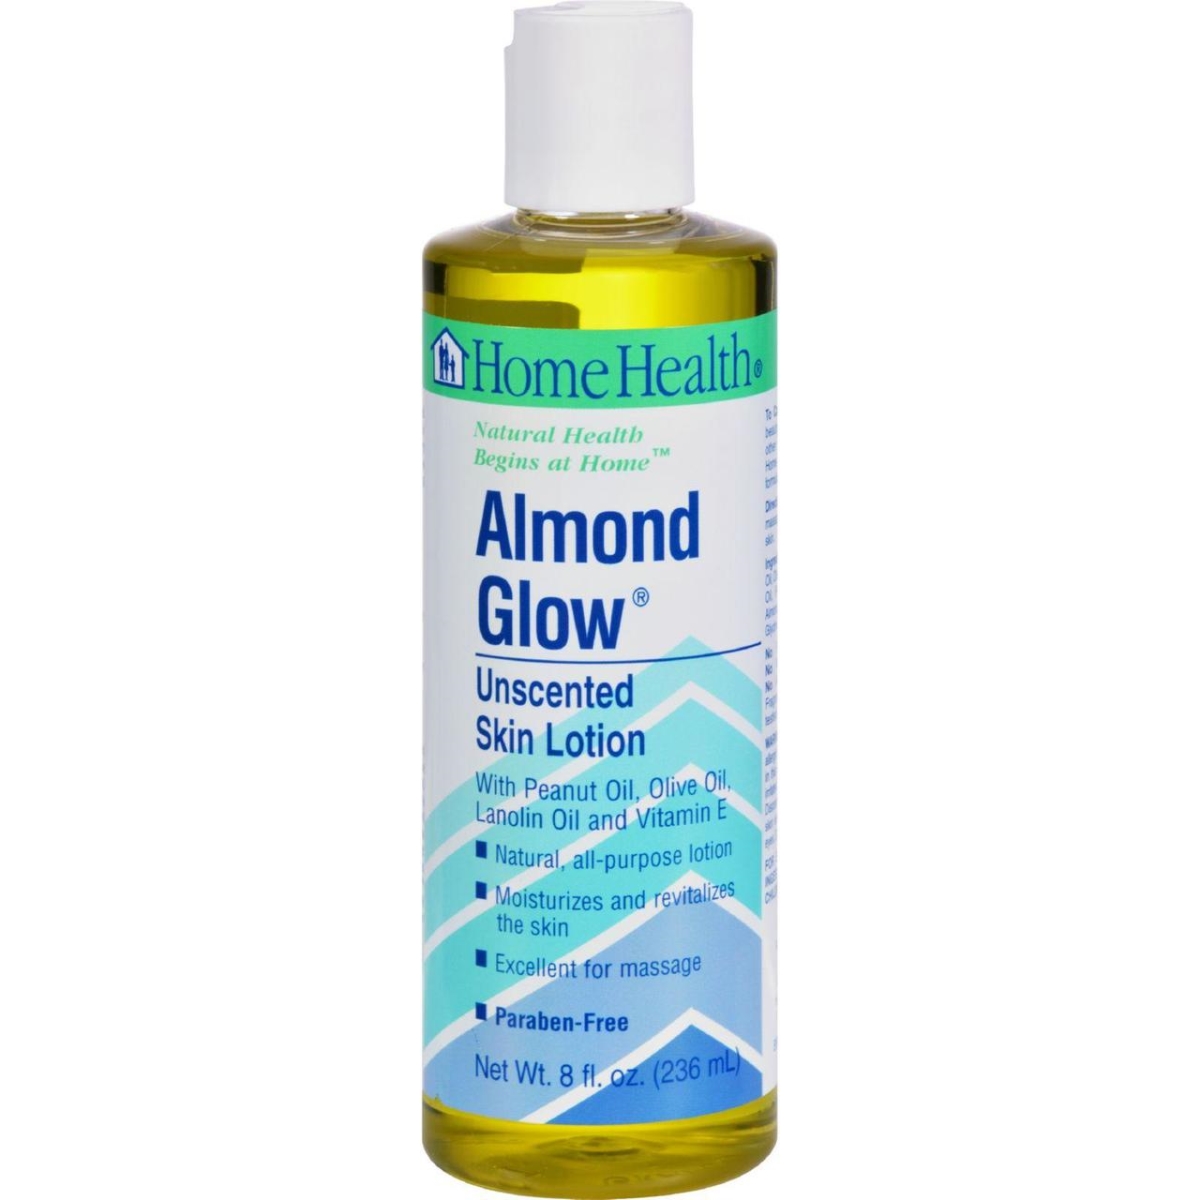 Hg0379362 8 Fl Oz Almond Glow Skin Lotion Unscented